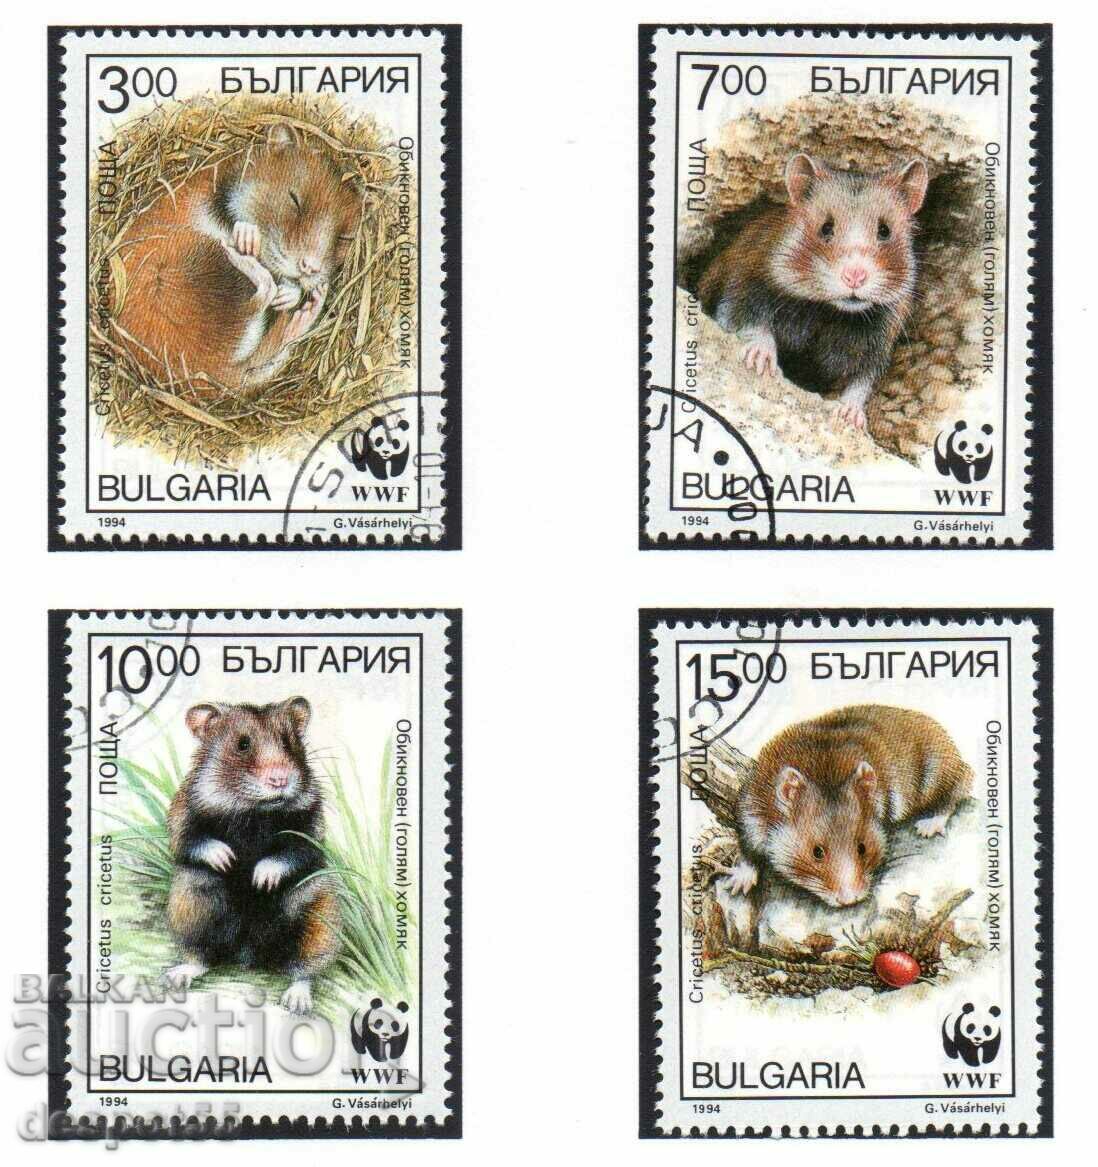 1994. Bulgaria. WWF - European Hamster.